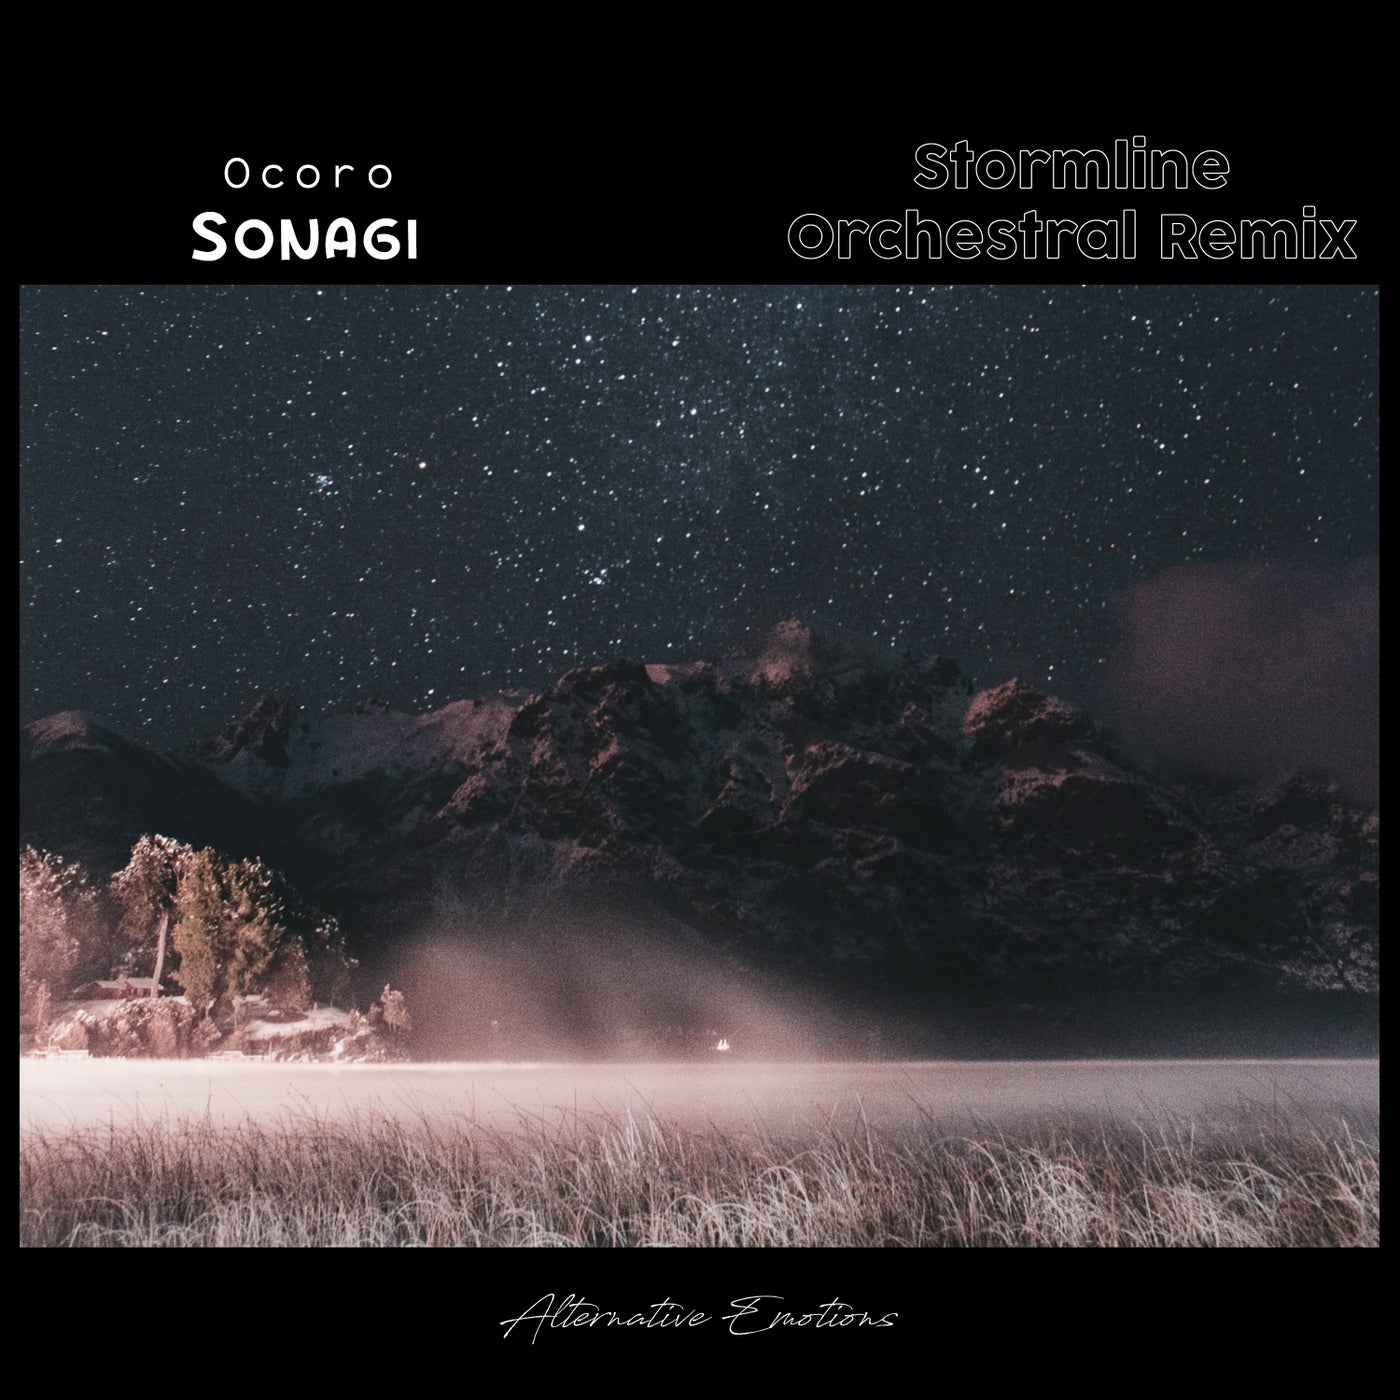 Sonagi (Stormline Orchestral Remix)